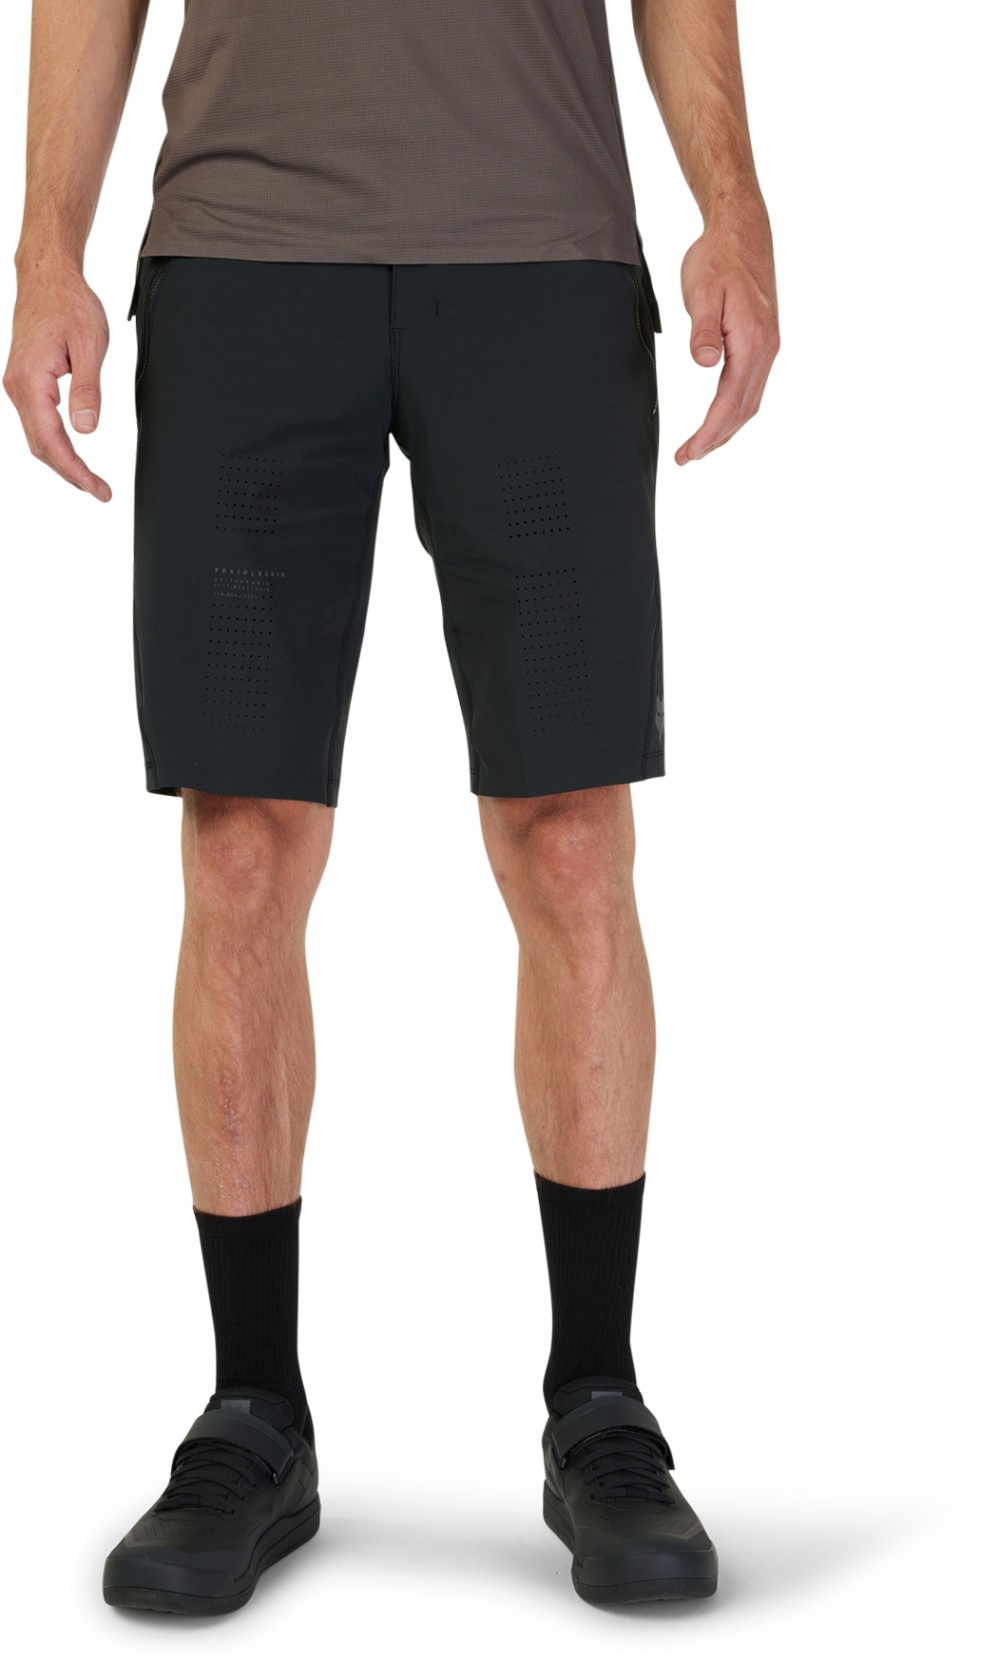 Flexair MTB Shorts with Liner image 2